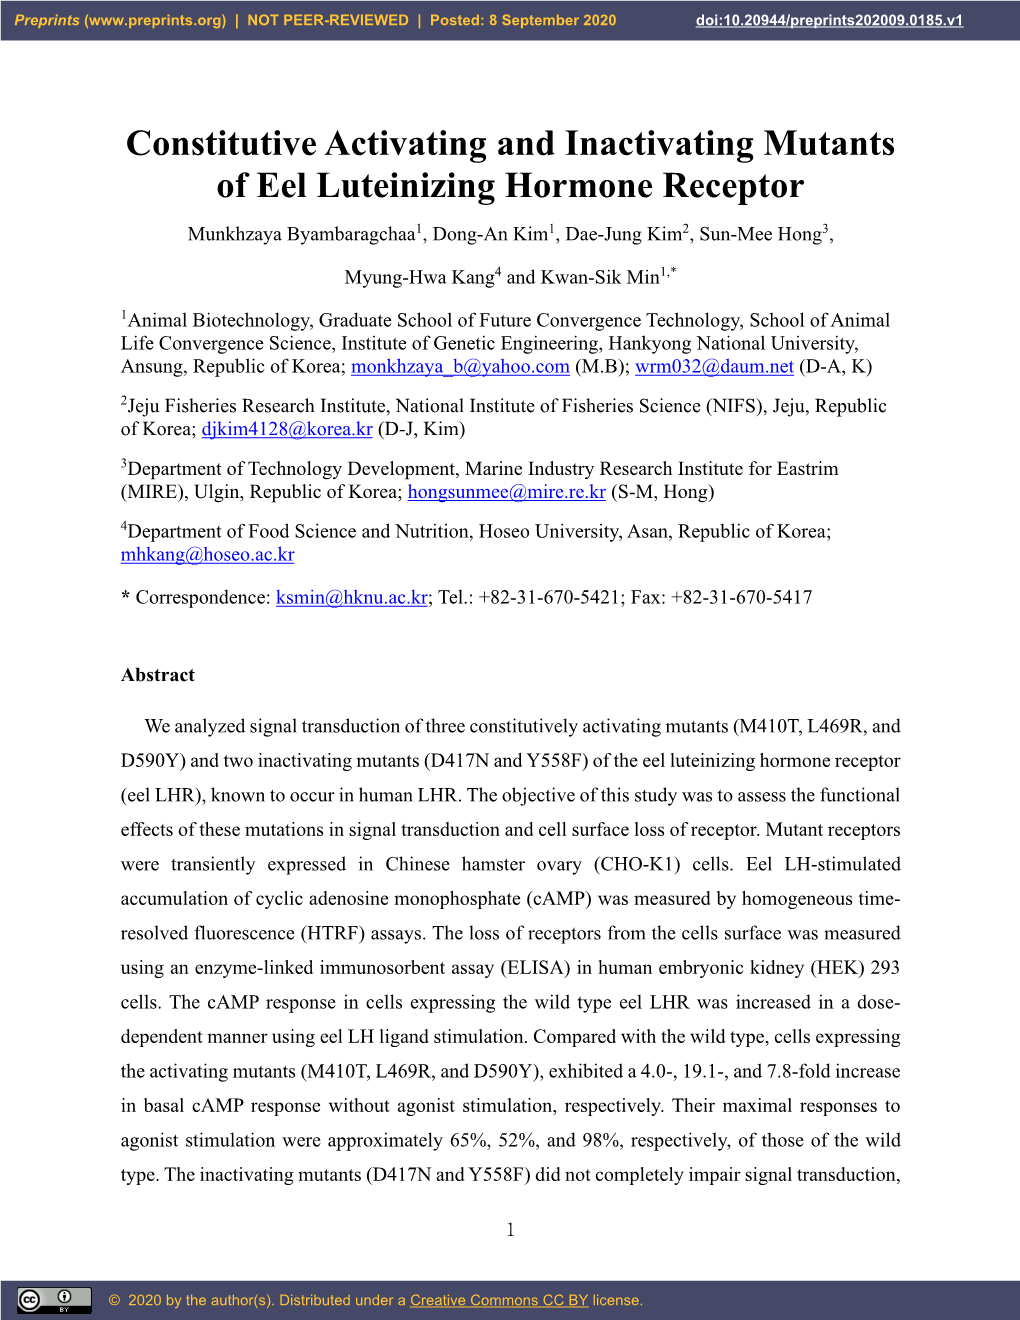 Constitutive Activating and Inactivating Mutants of Eel Luteinizing Hormone Receptor Munkhzaya Byambaragchaa1, Dong-An Kim1, Dae-Jung Kim2, Sun-Mee Hong3